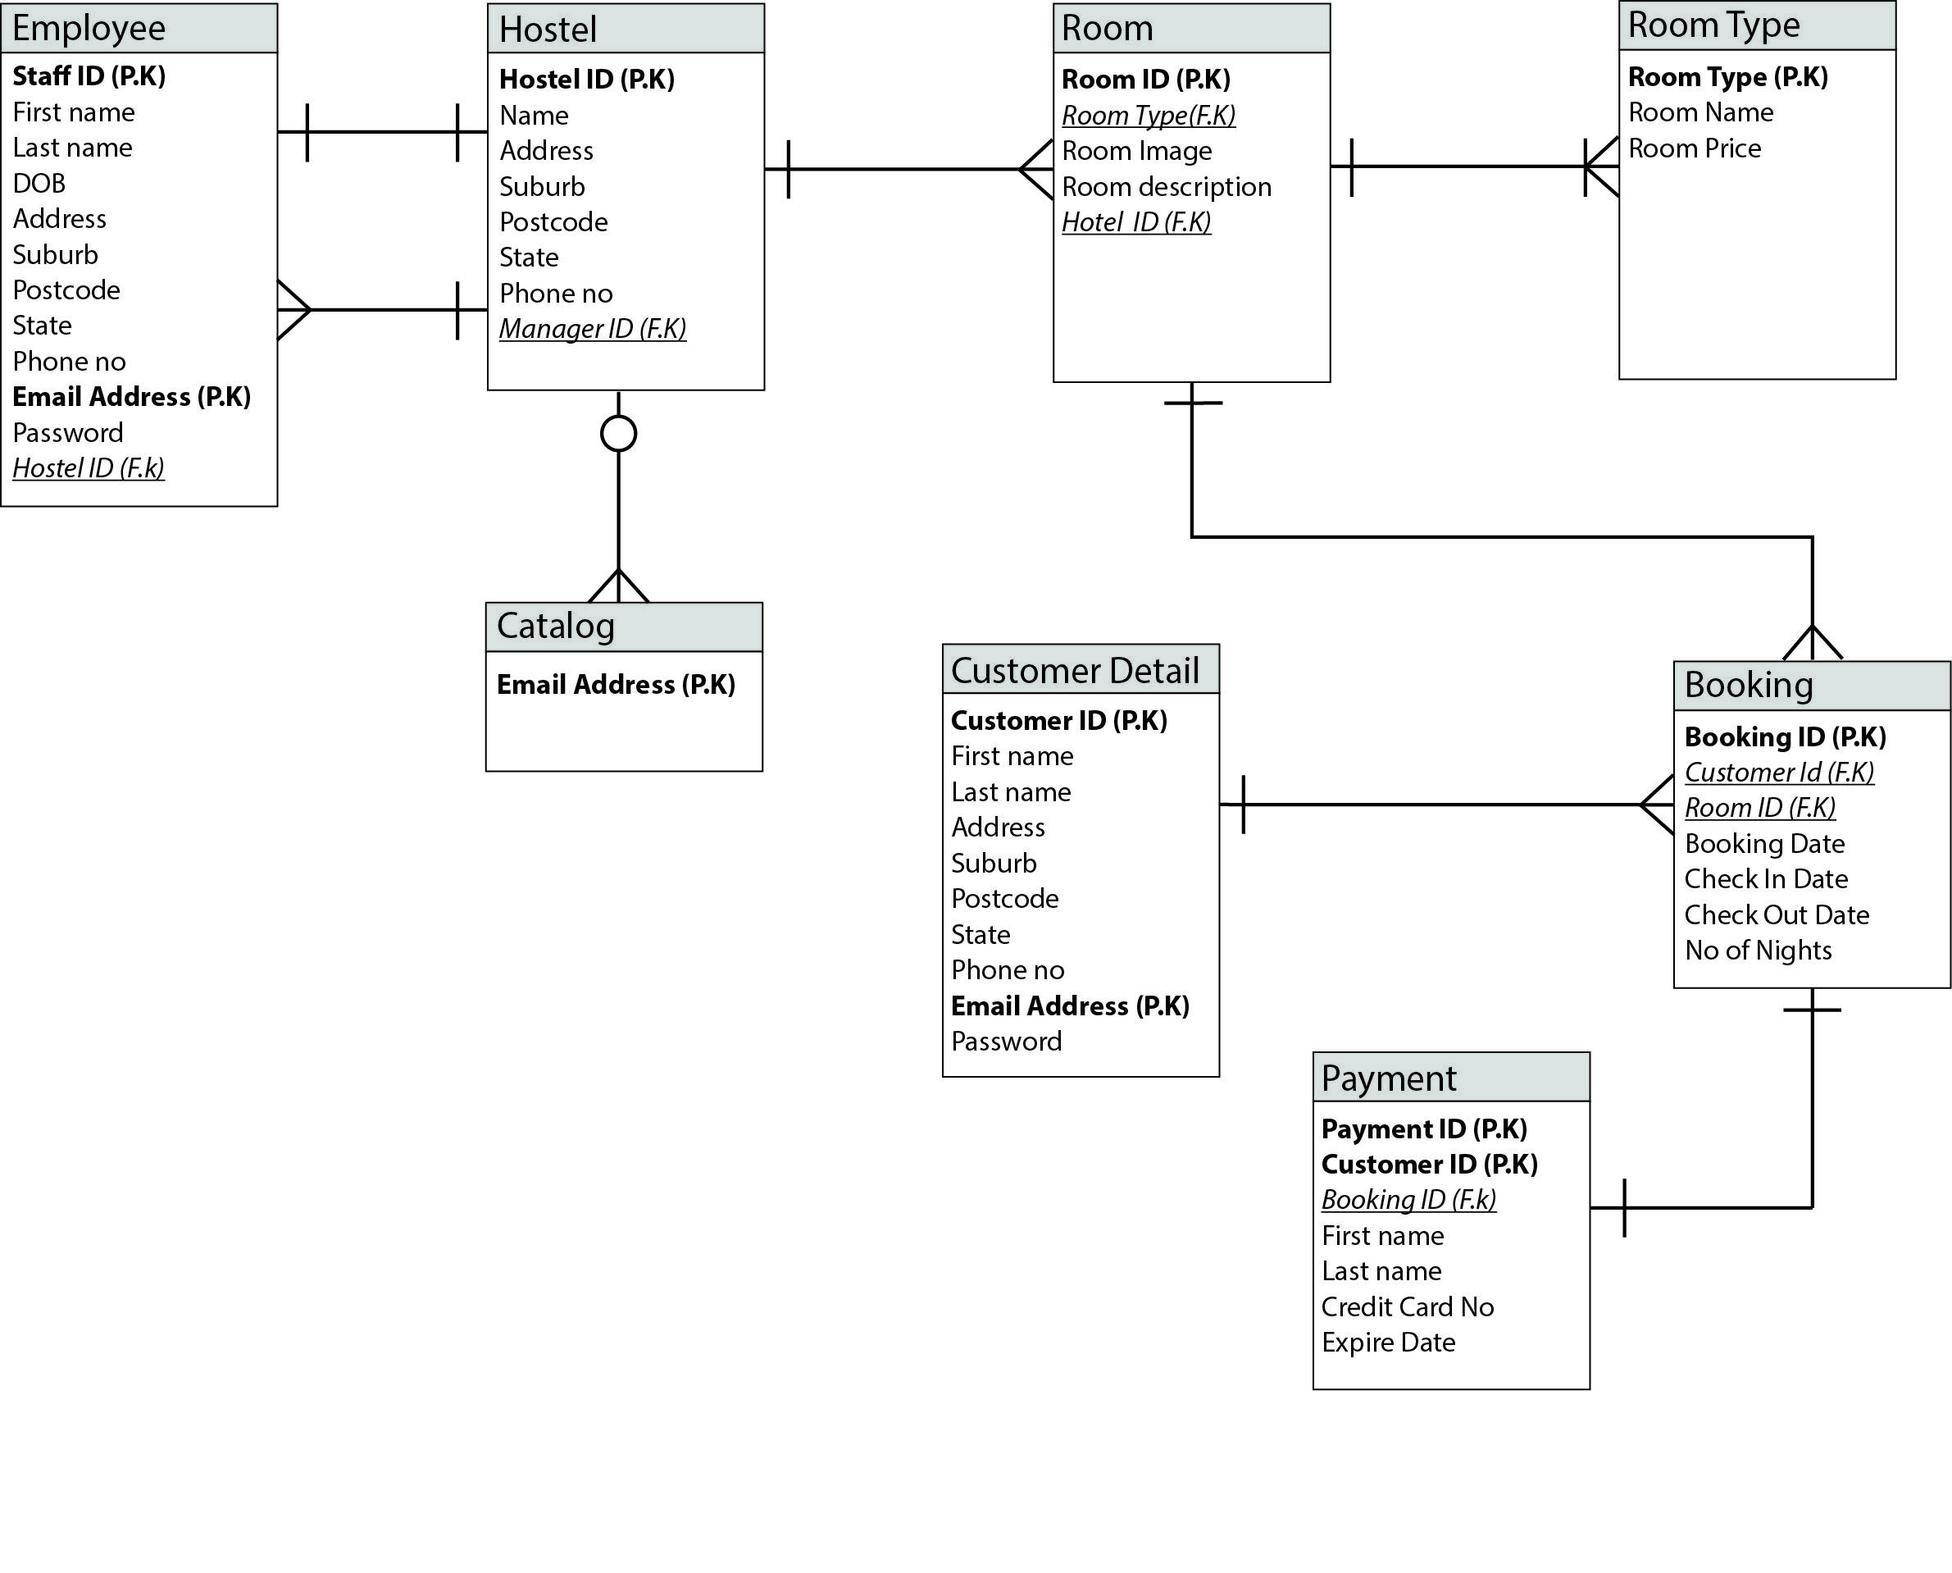 Mysql - Online Hostel Management System Er Diagram - Database regarding Er Diagram Example Questions Answers